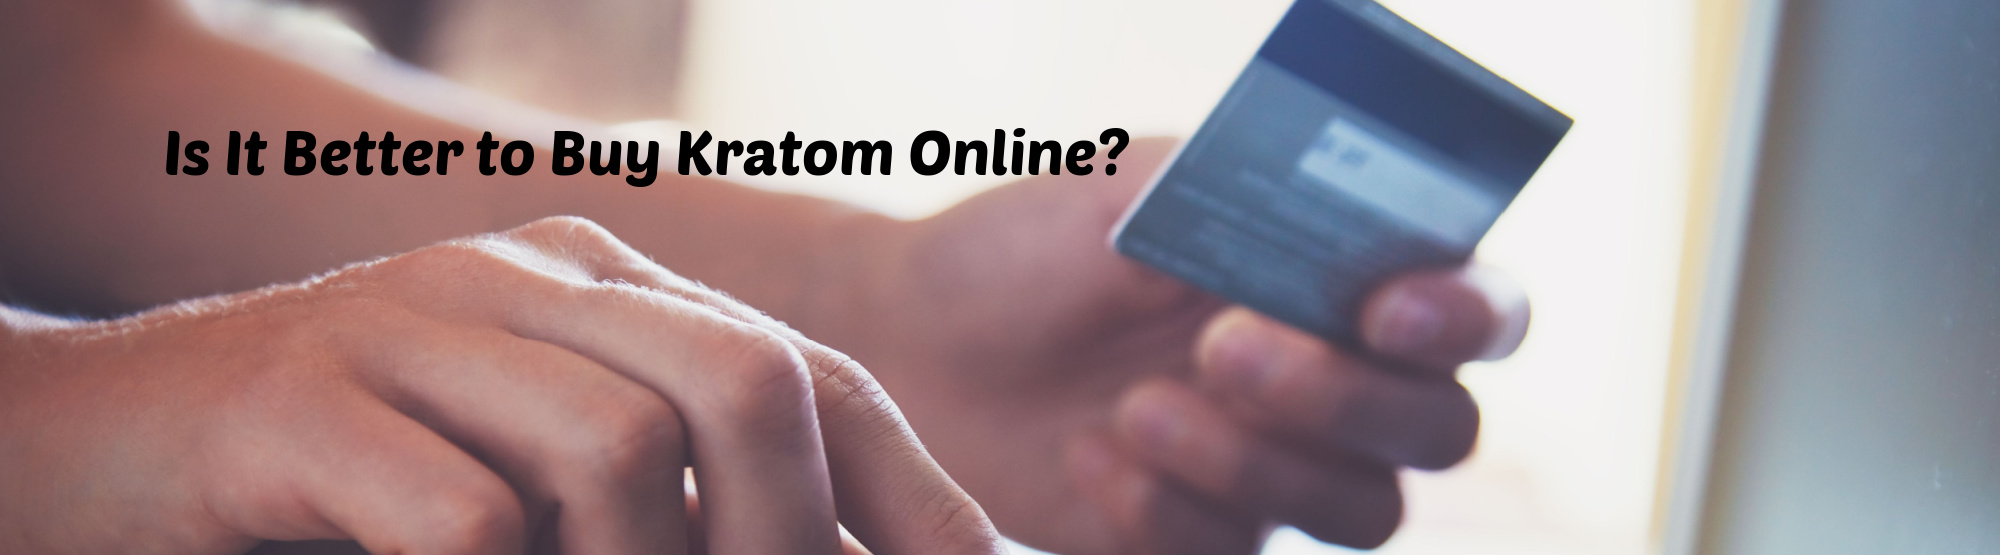 image of is it better to buy kratom online